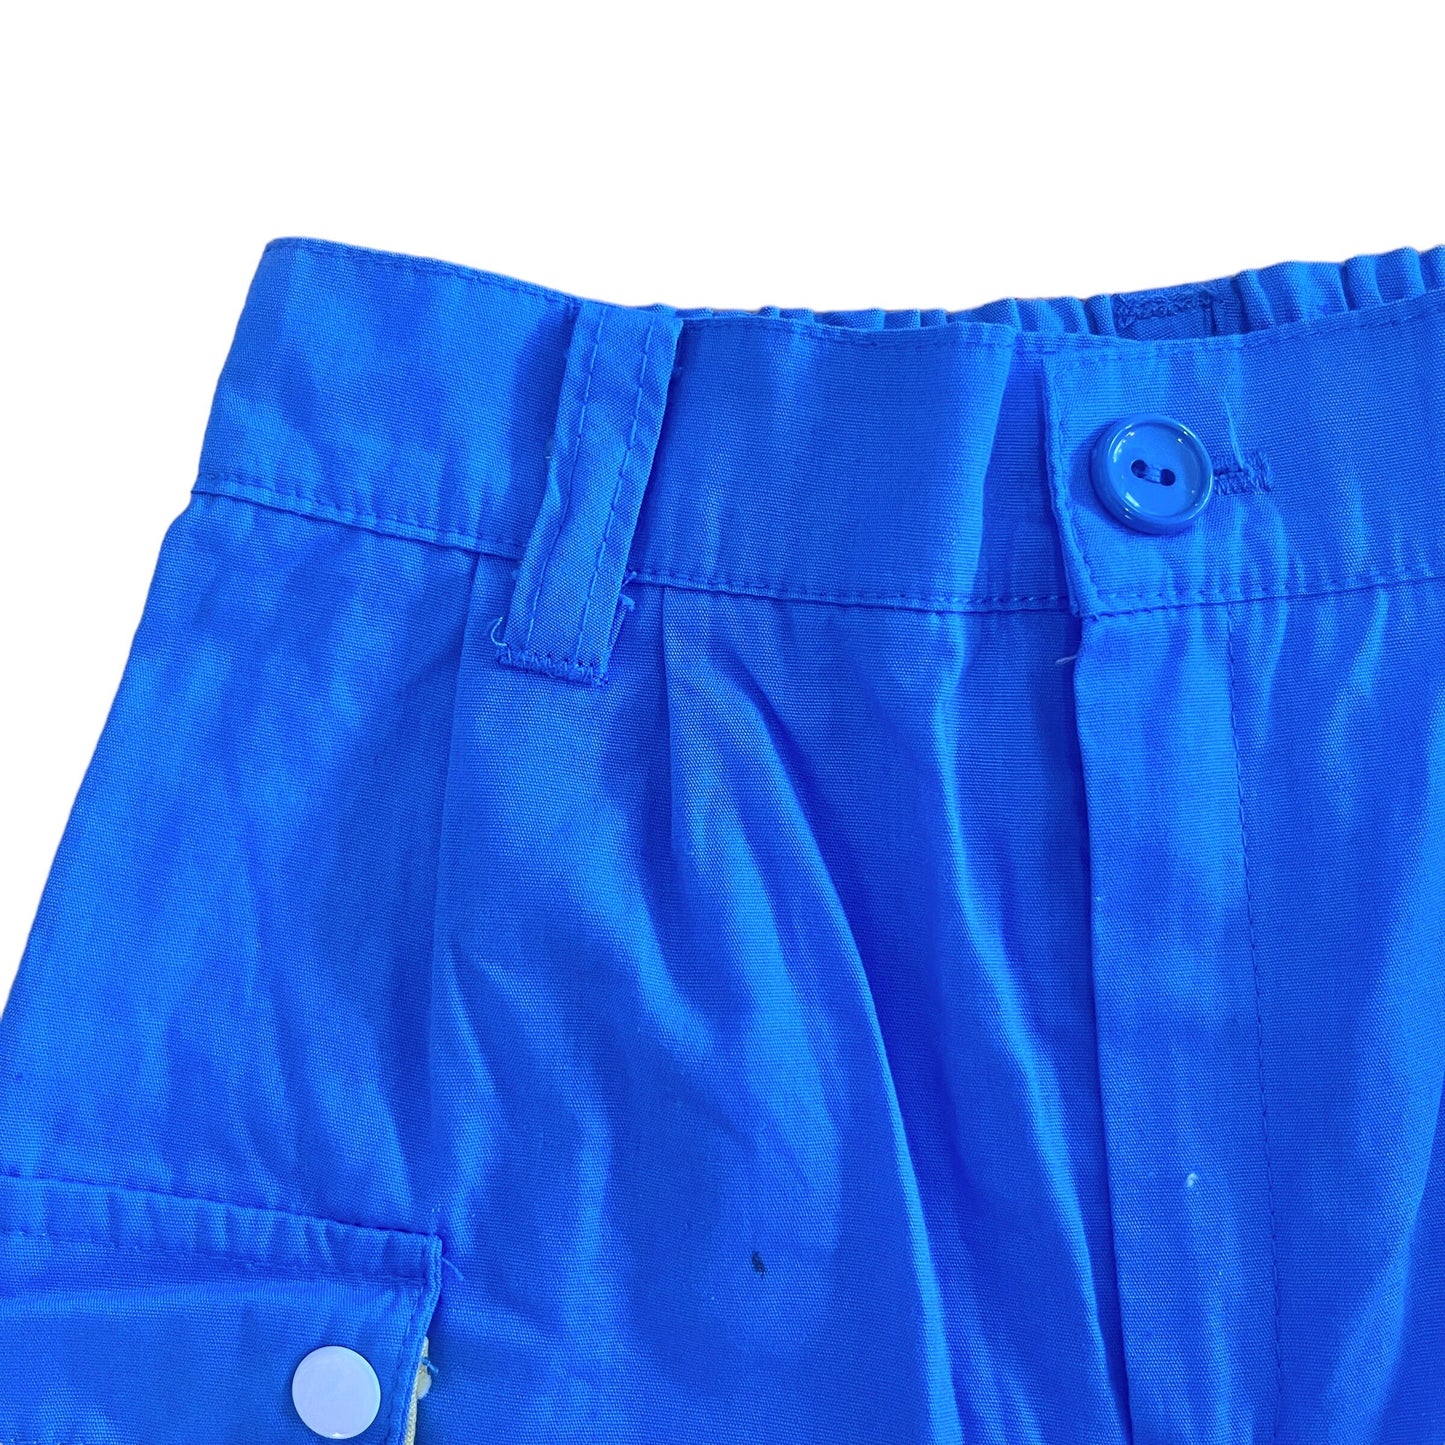 Blue Shorts 18-24 Months